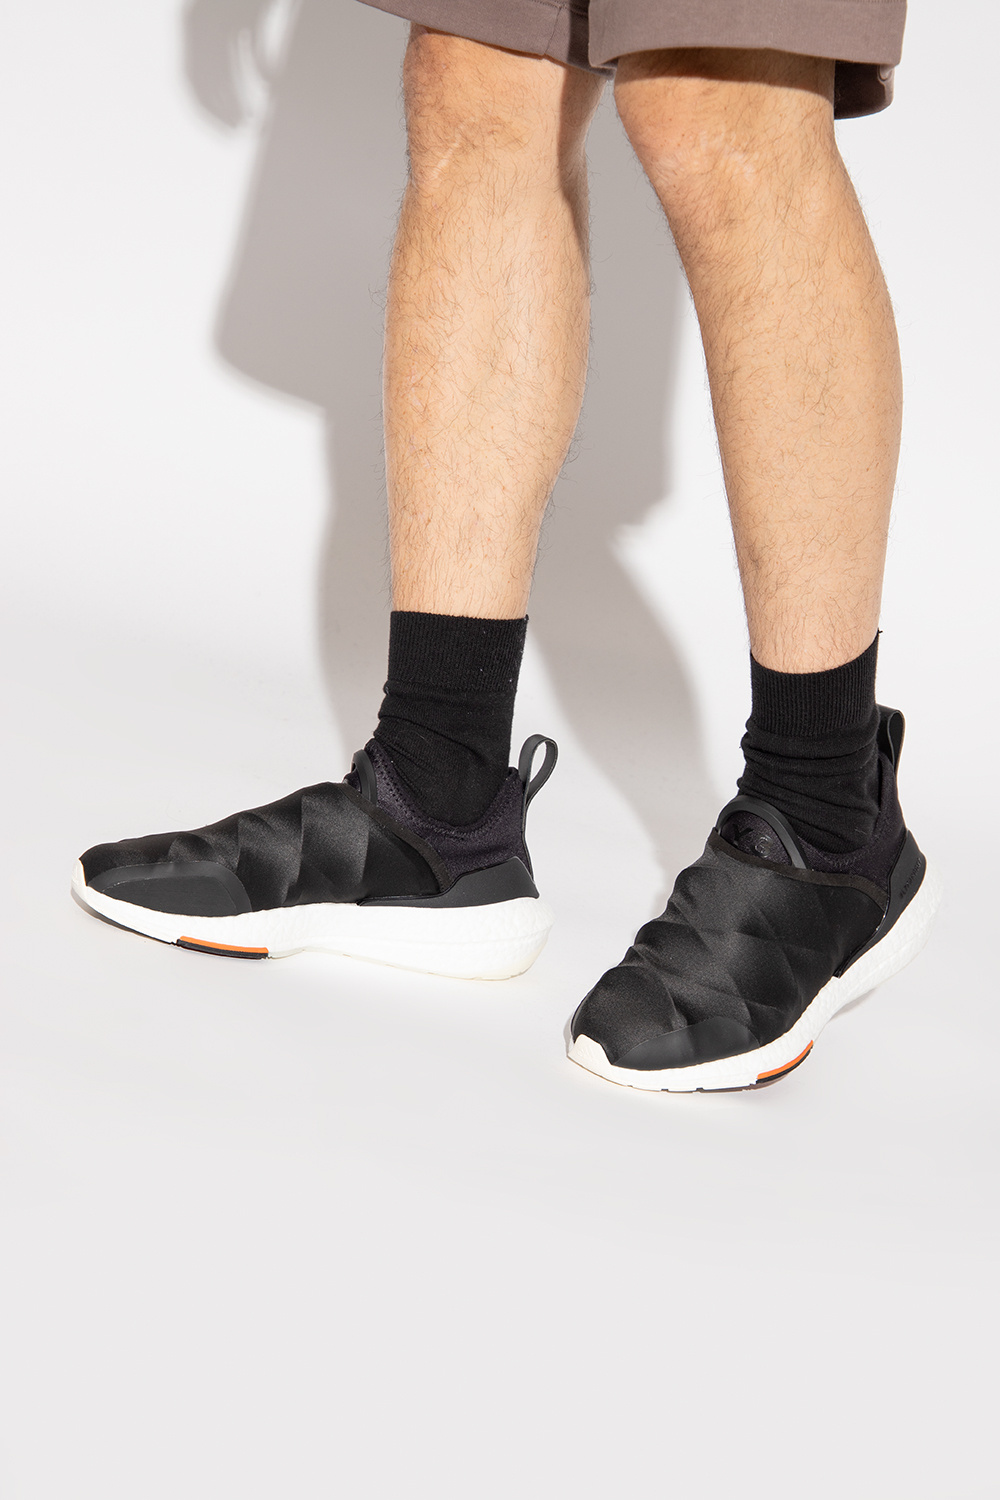 Y-3 Yohji Yamamoto Ultraboost 22' sneakers | Men's Shoes | Vitkac